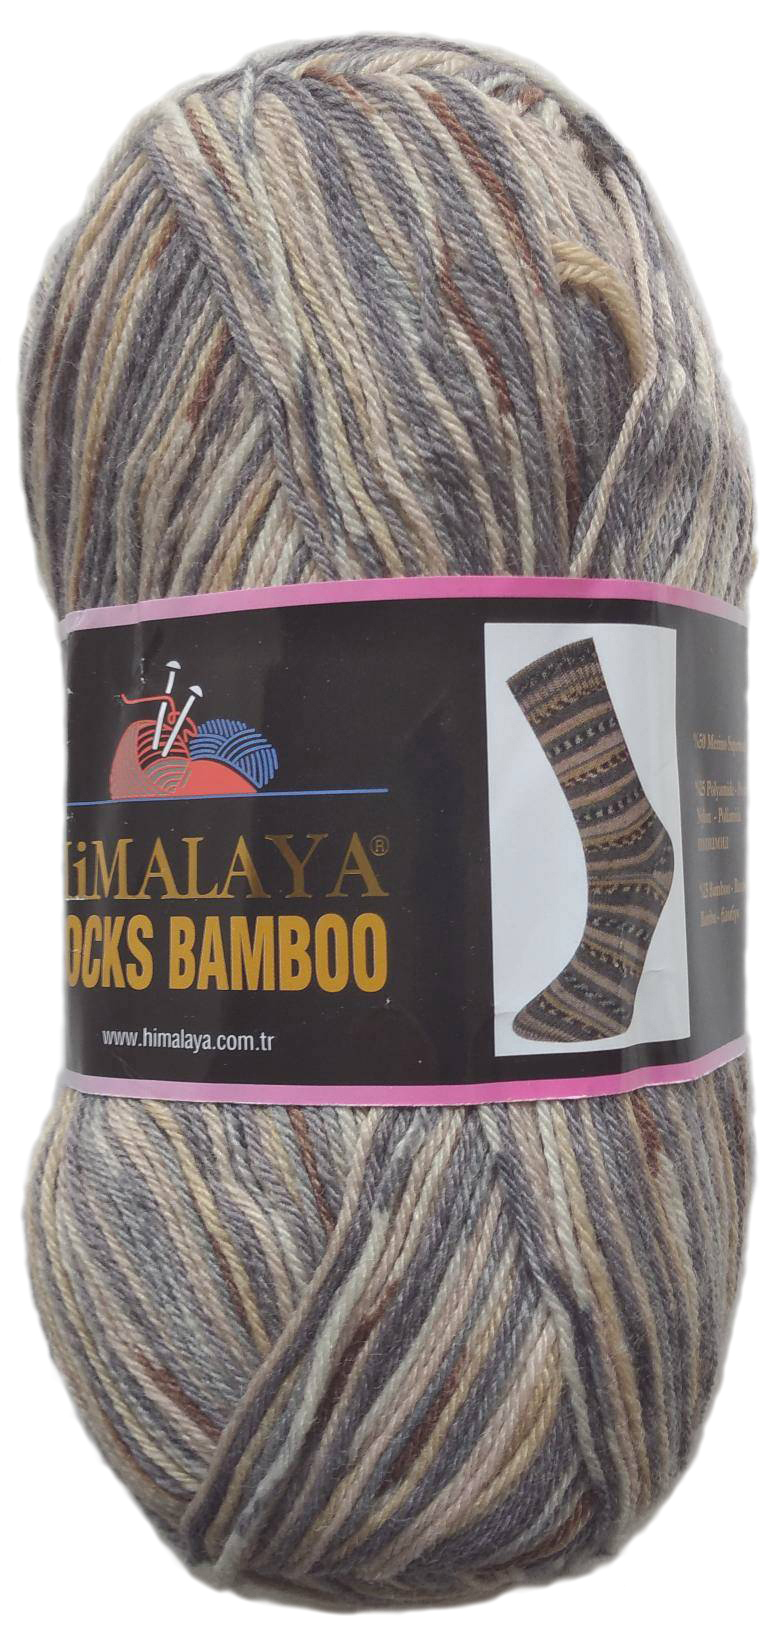 фото Пряжа носочная himalaya socks bamboo цвет 130-02 (бежевый, серый, коричневый)